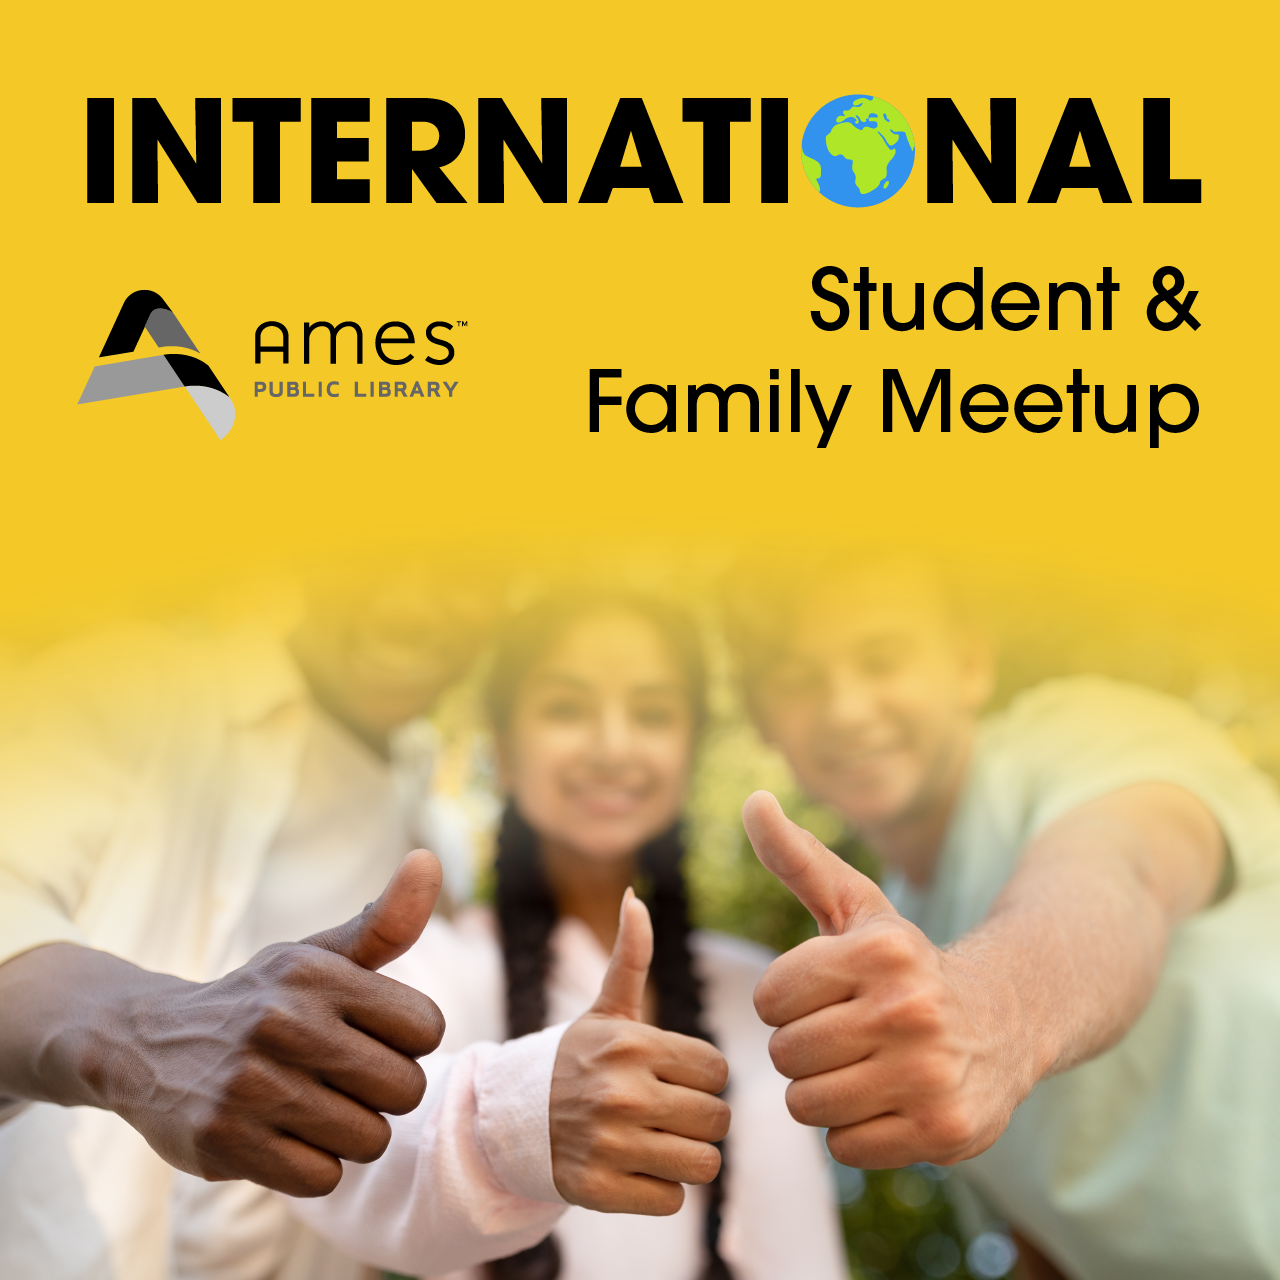 International Student & Family Meetup